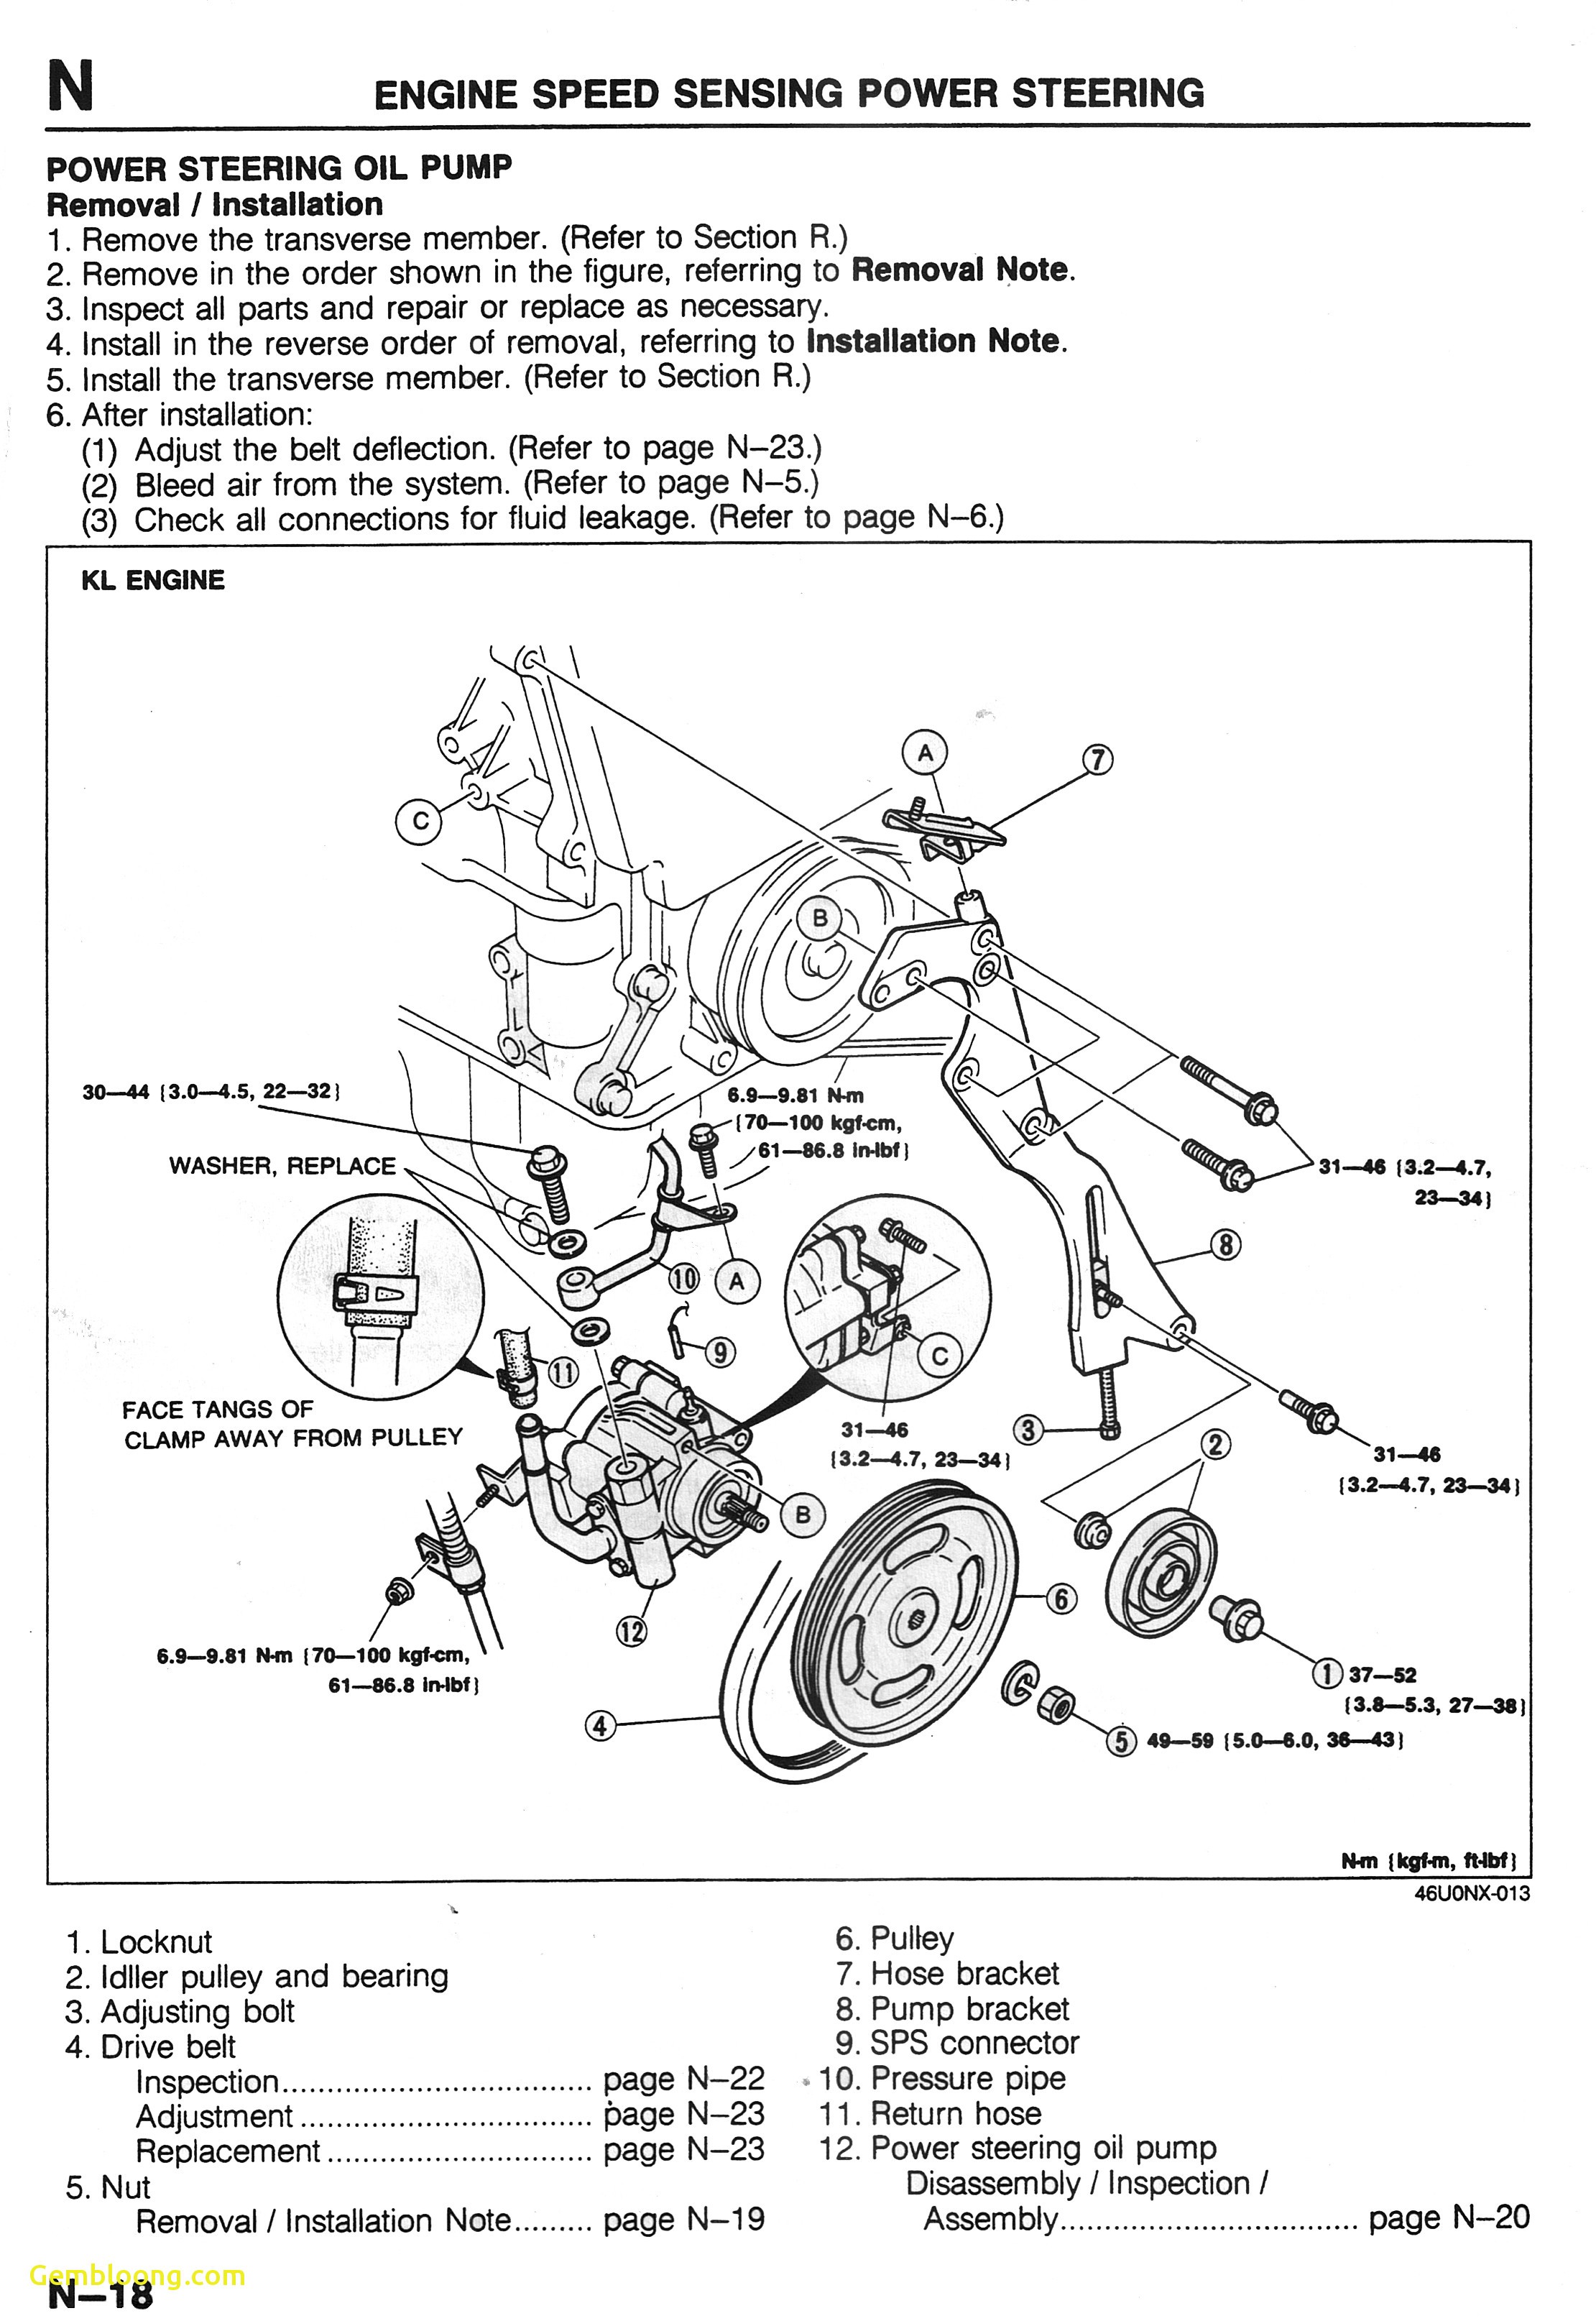 2002 Mazda Millenia Engine Diagram 2002 Mazda Millenia Engine Diagram Of 2002 Mazda Millenia Engine Diagram